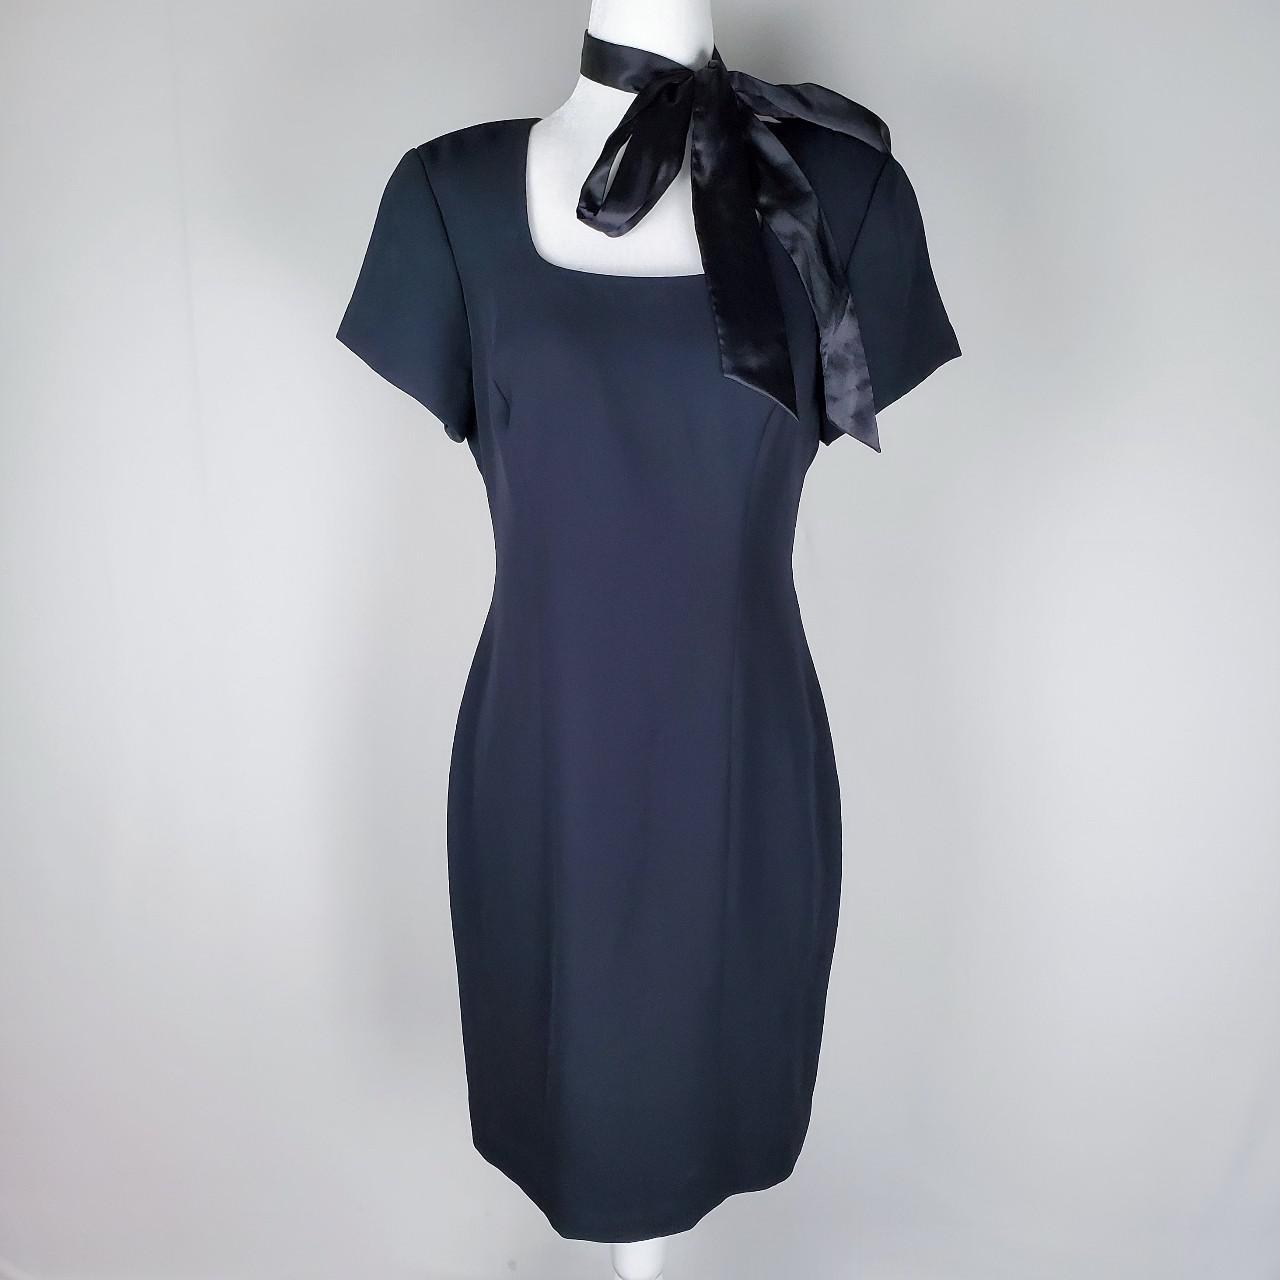 Liz Claiborne Women's Black Dress